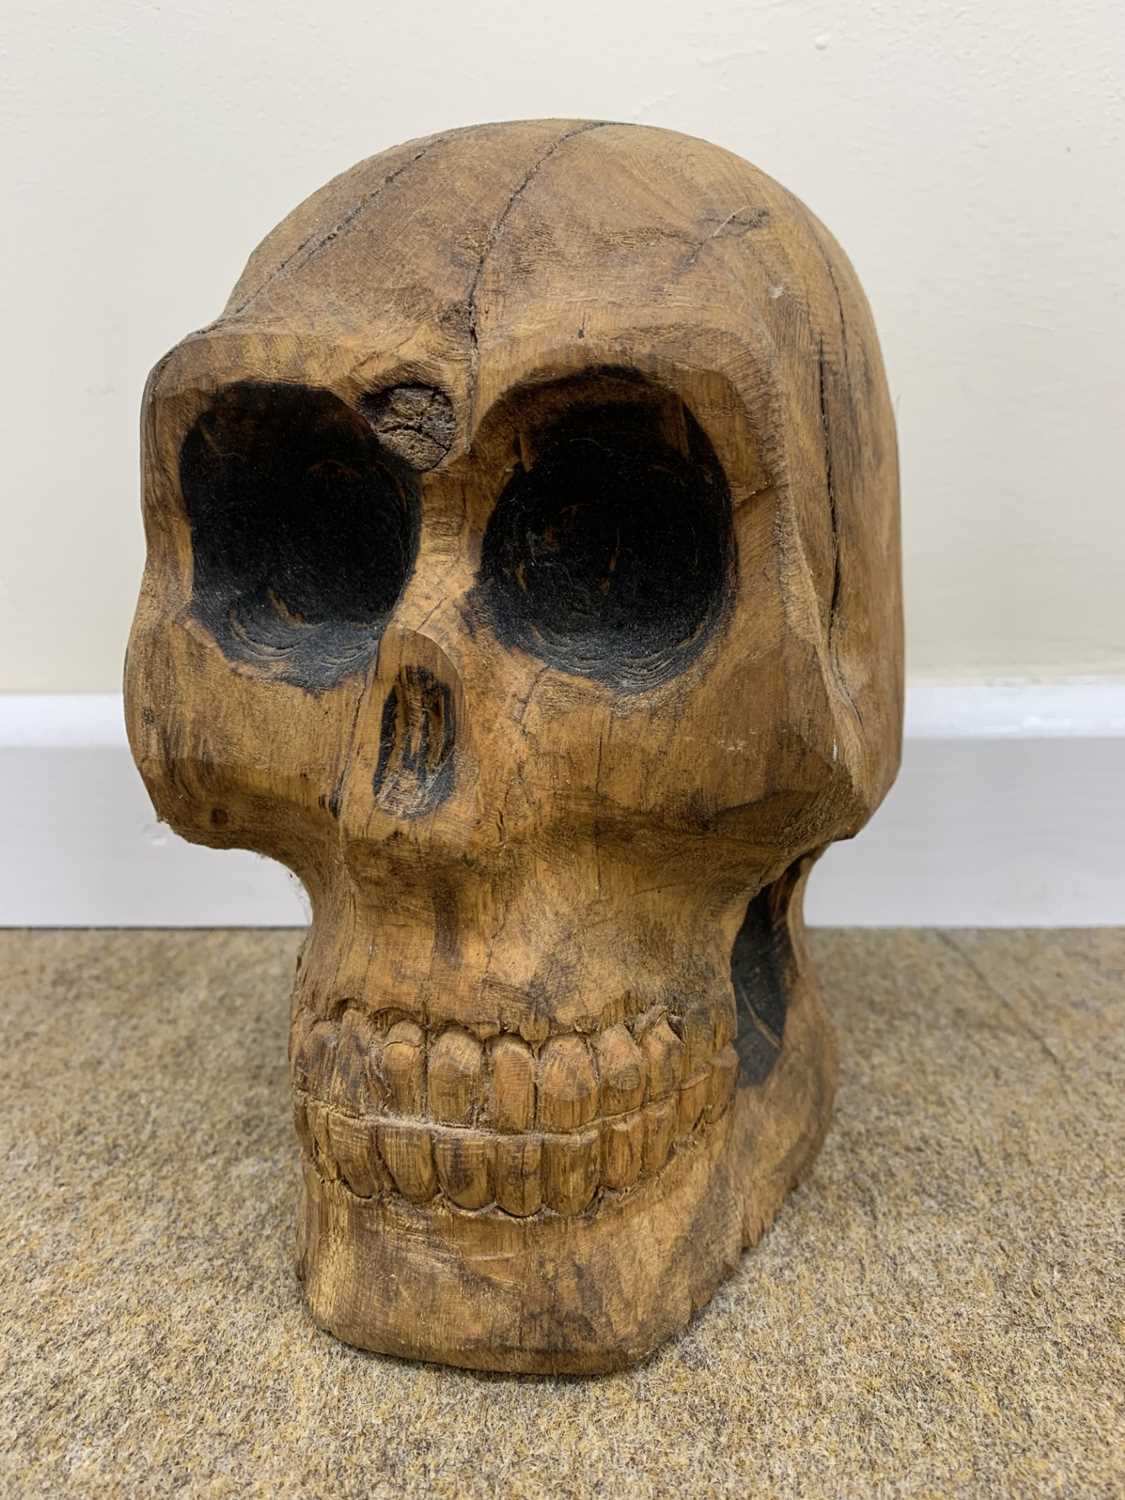 Attributed to David Chedgey (British, b.1940), Carved wood skull sculpture, 12x20cm approx. - Bild 2 aus 2